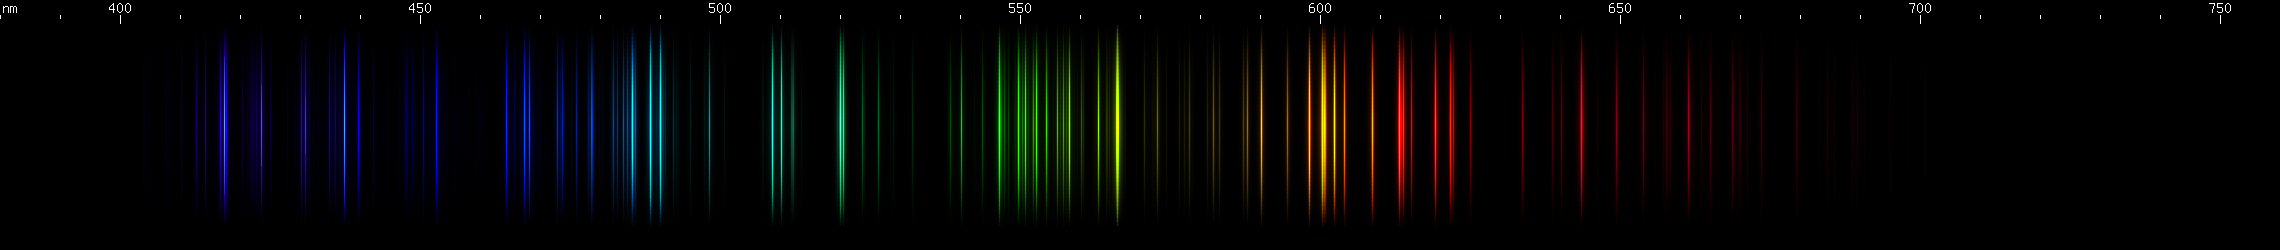 Spectral Lines of Yttrium